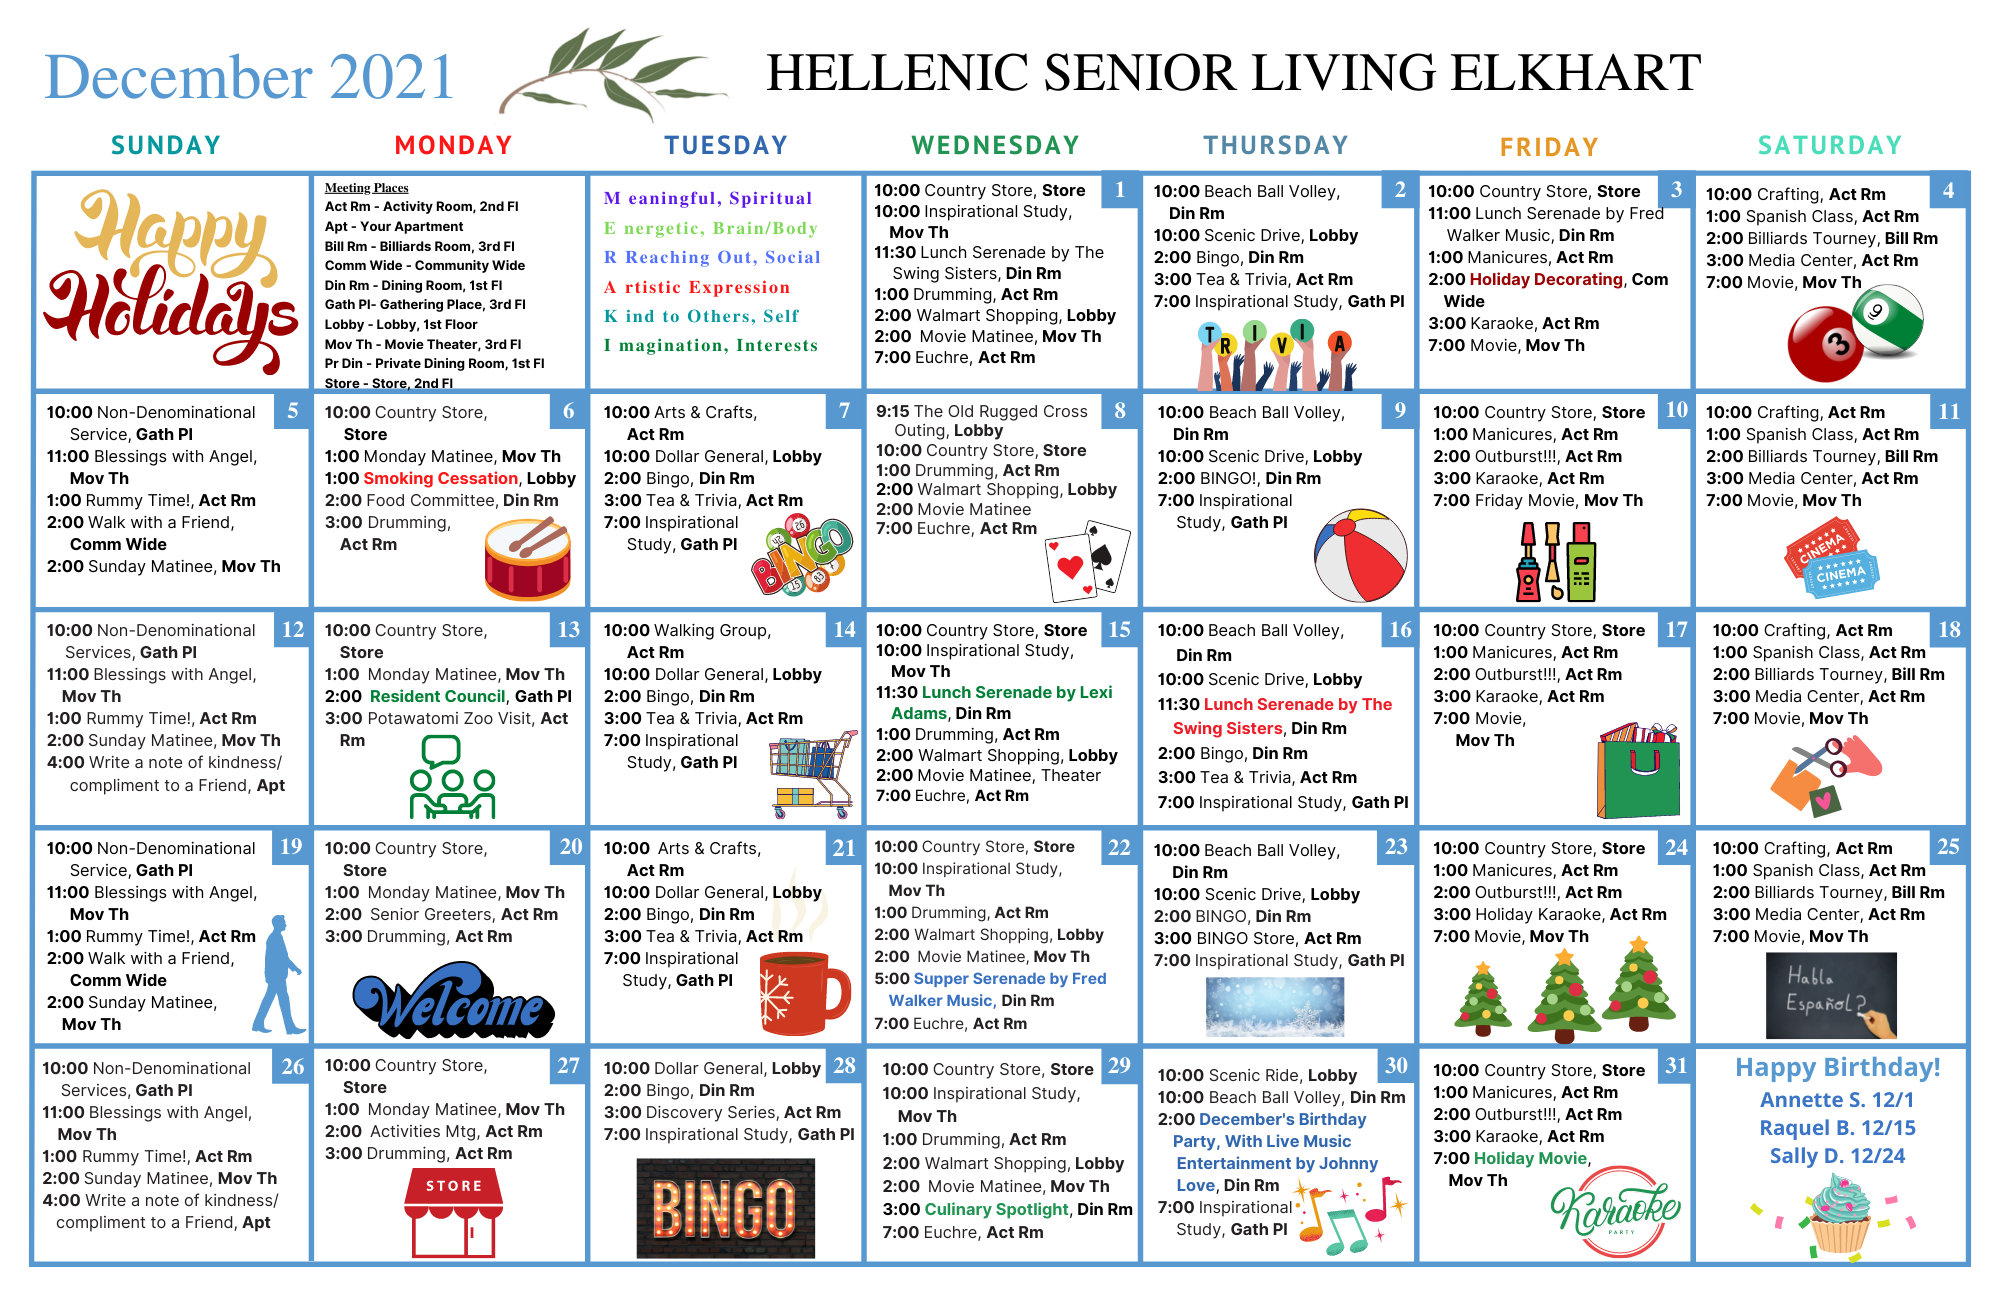 December Activity Calendar. Monthly Activity Calendar for residents at Hellenic Senior Living of Elkhart for the month of December.